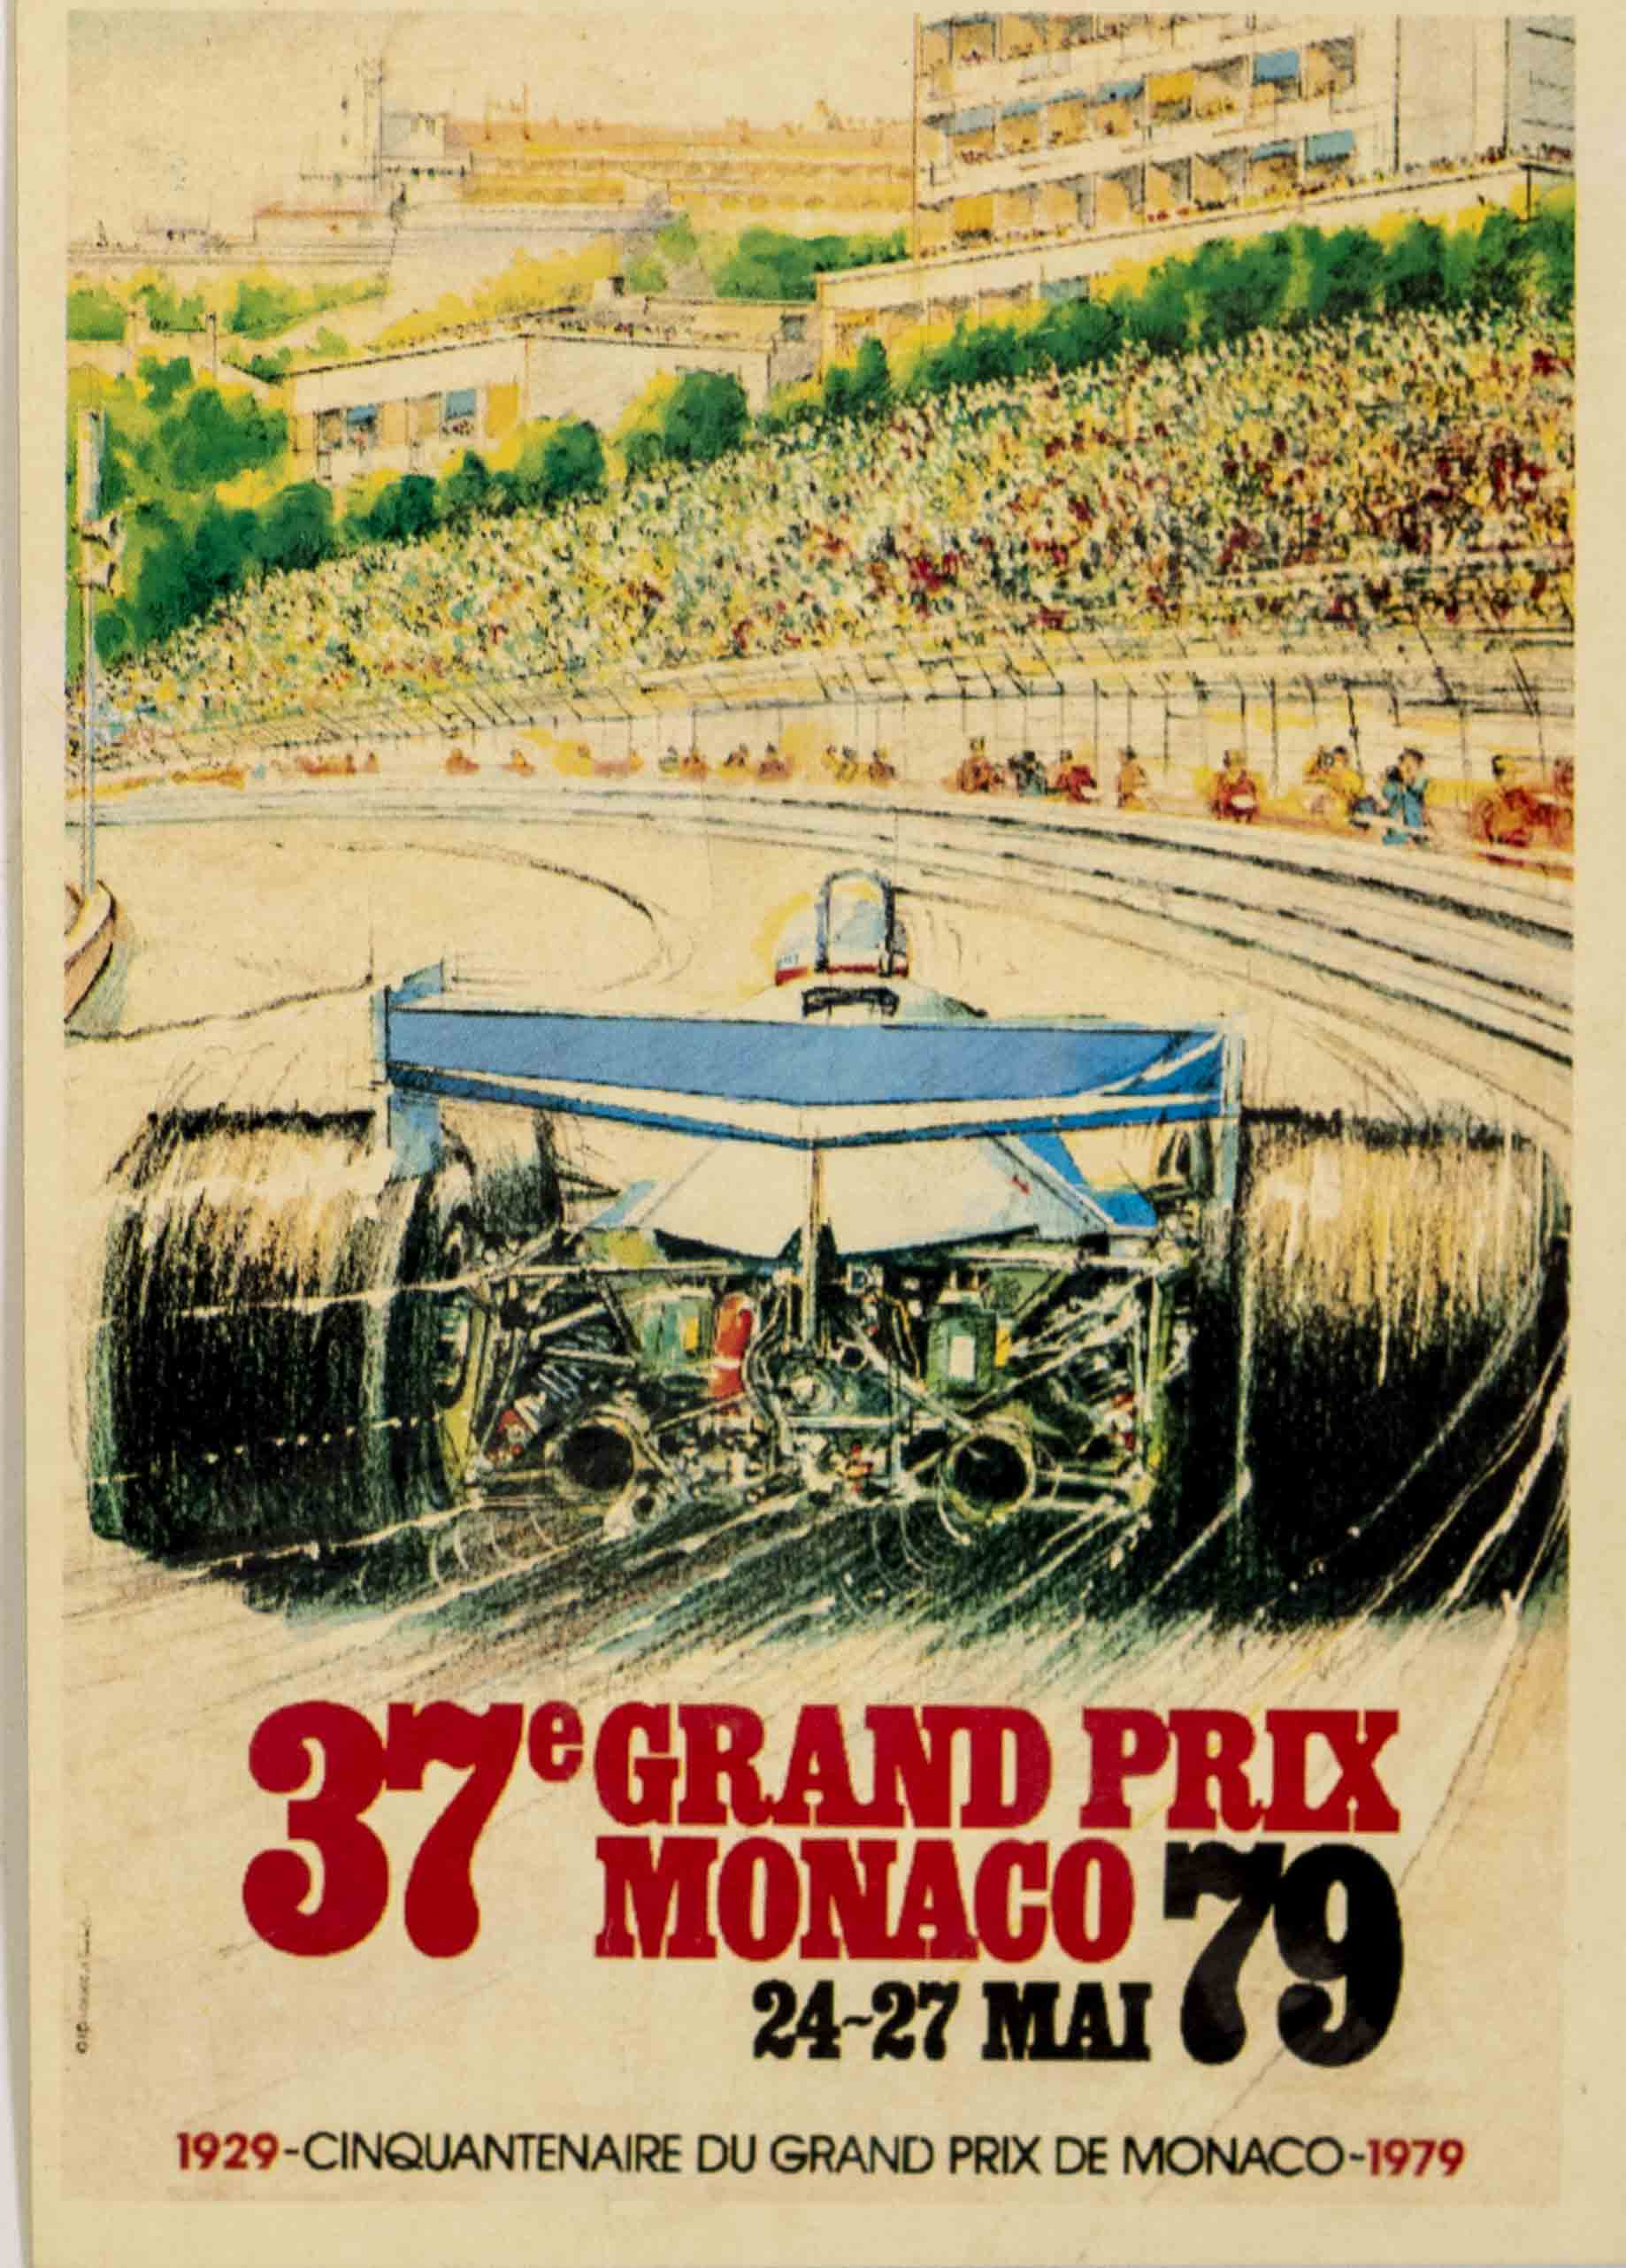 Pohlednice, 37 Grand prix Monaco, 1979